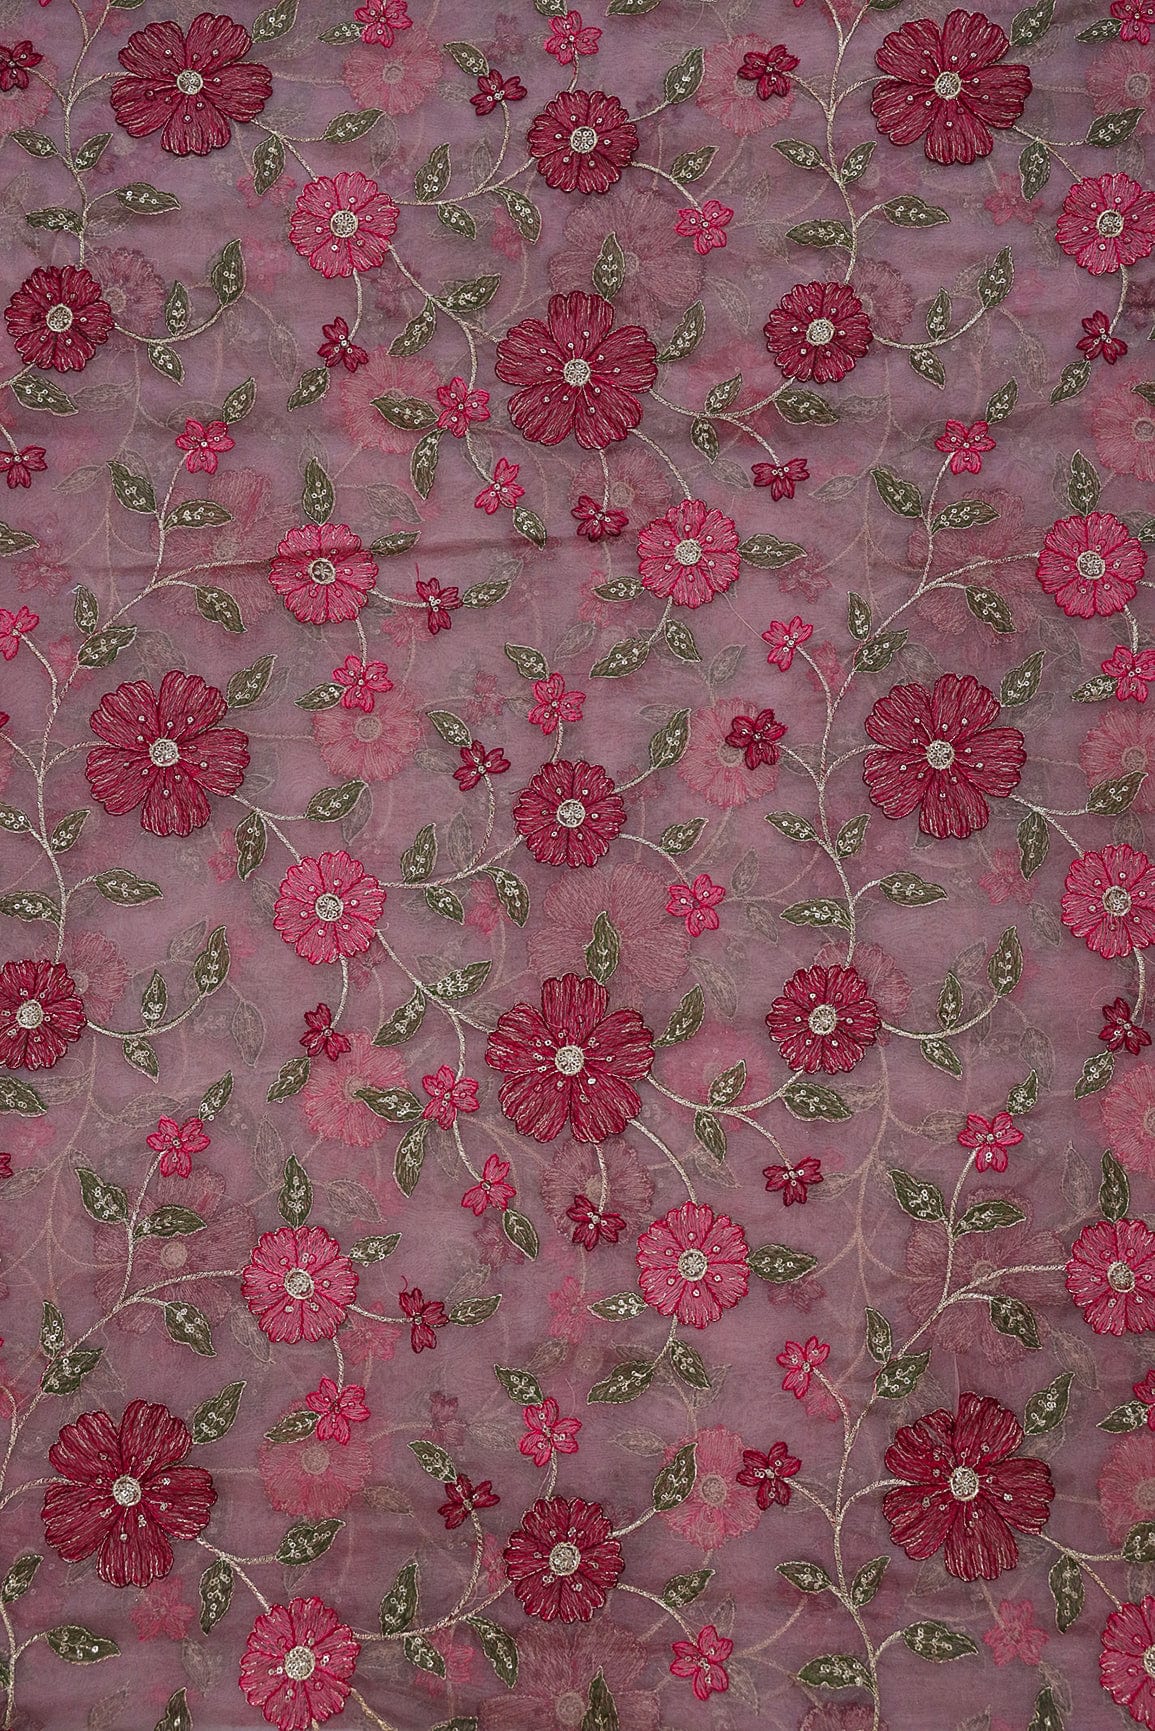 doeraa Embroidery Fabrics Multi Coloured Thread Embroidery On Salmon Pink Organza Fabric